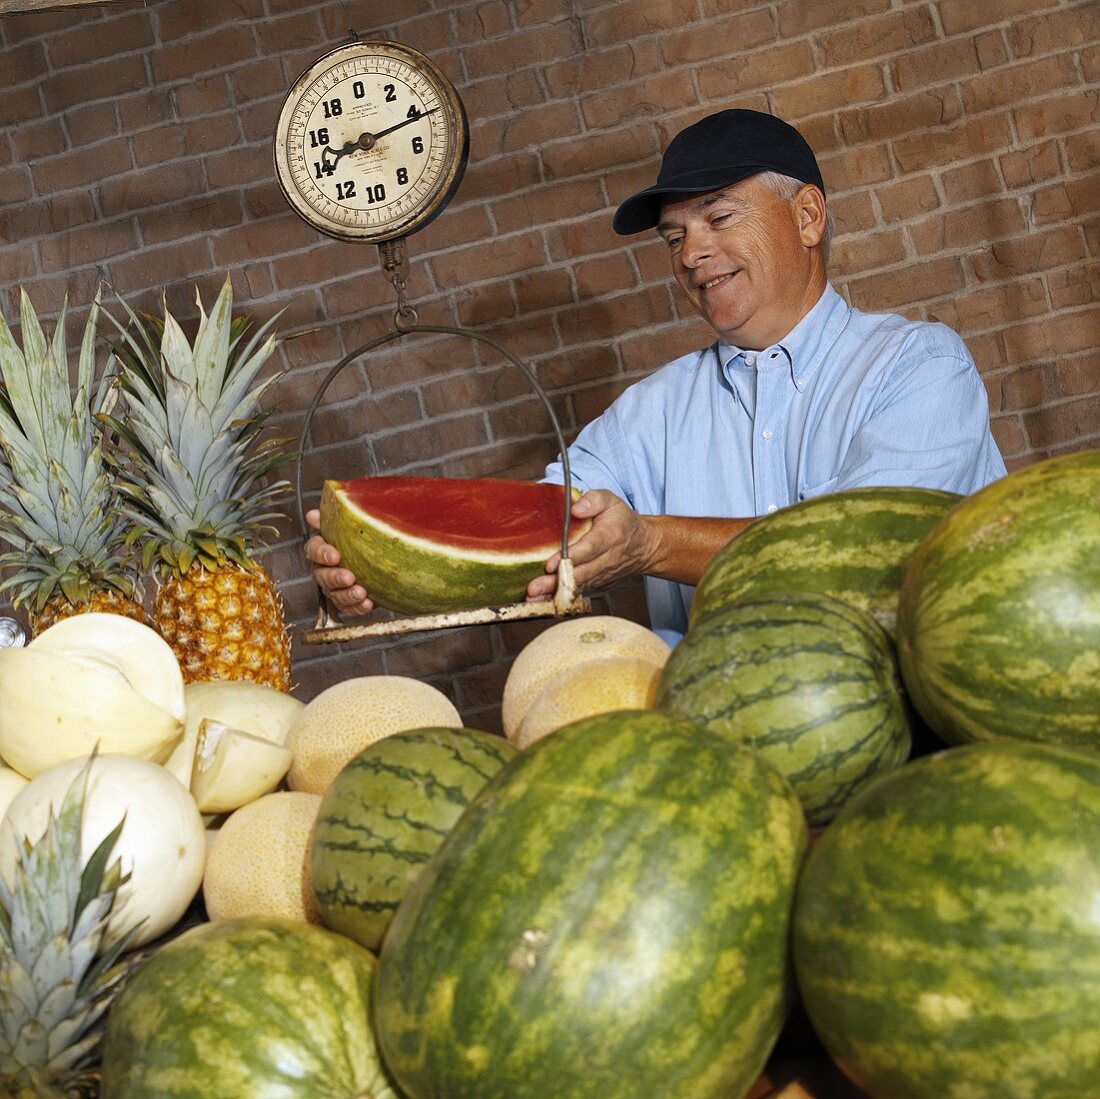 A Man Weighing a Watermelon at a Market Stand